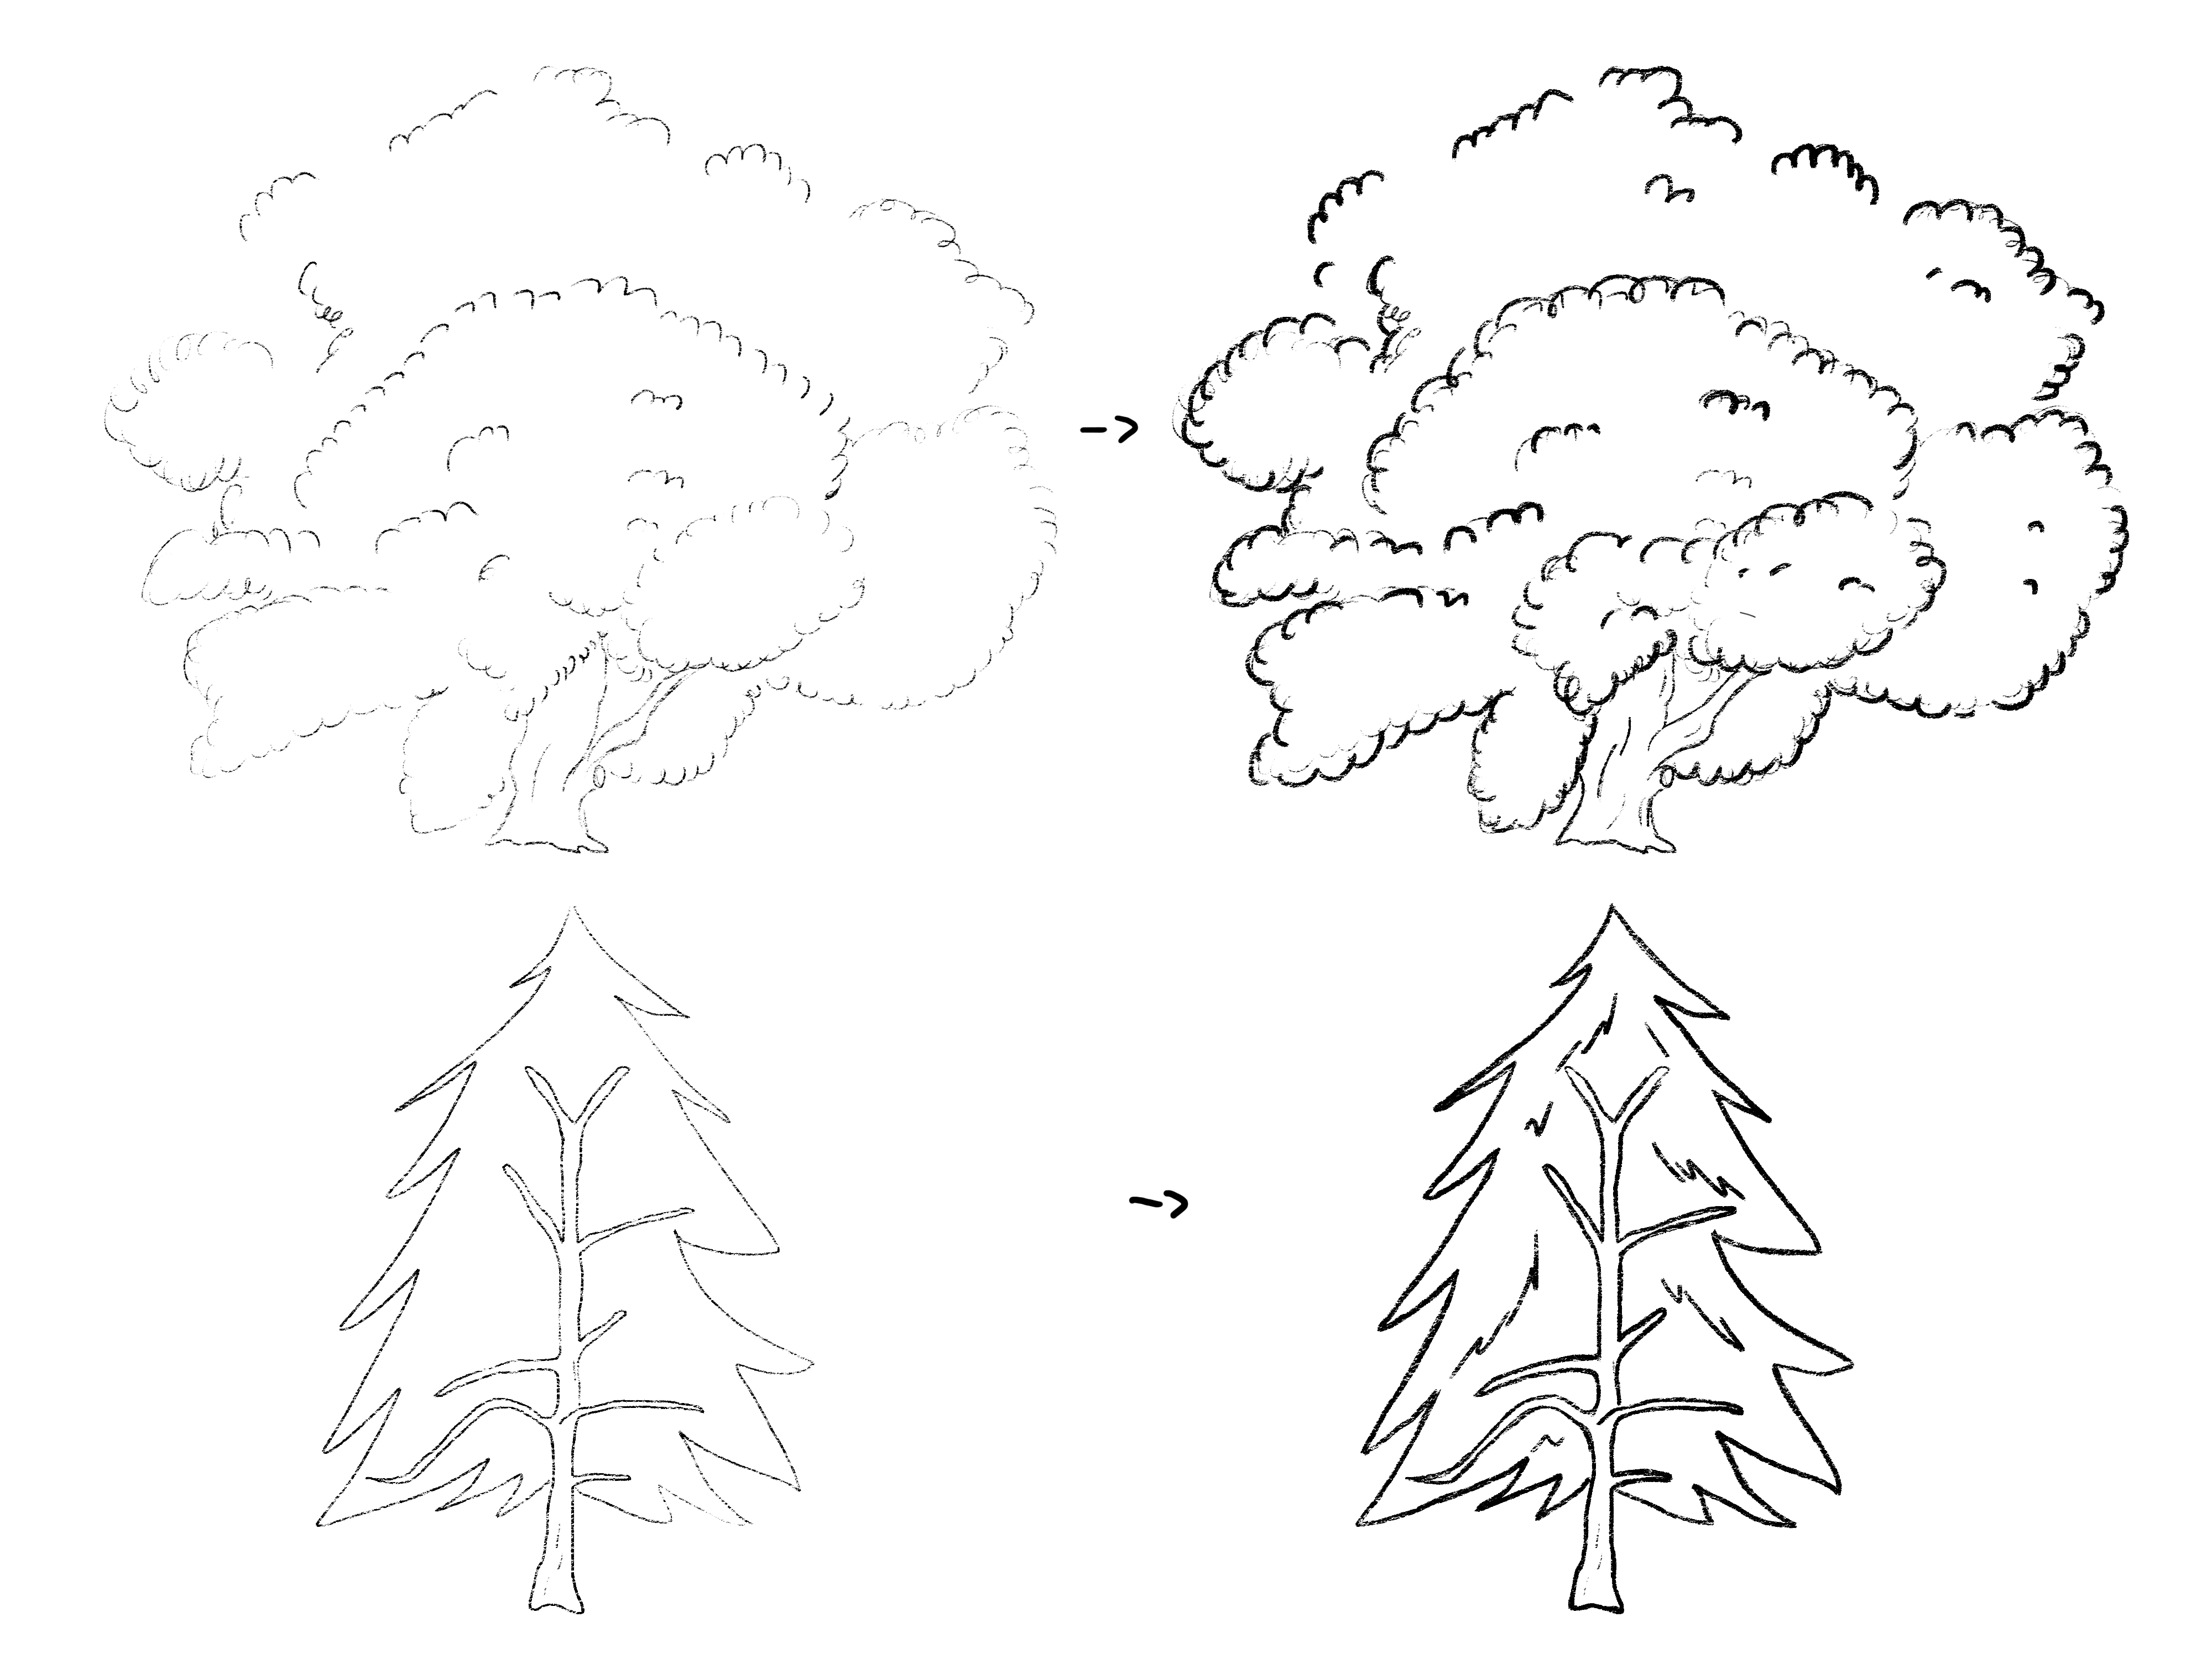 Tree study 1